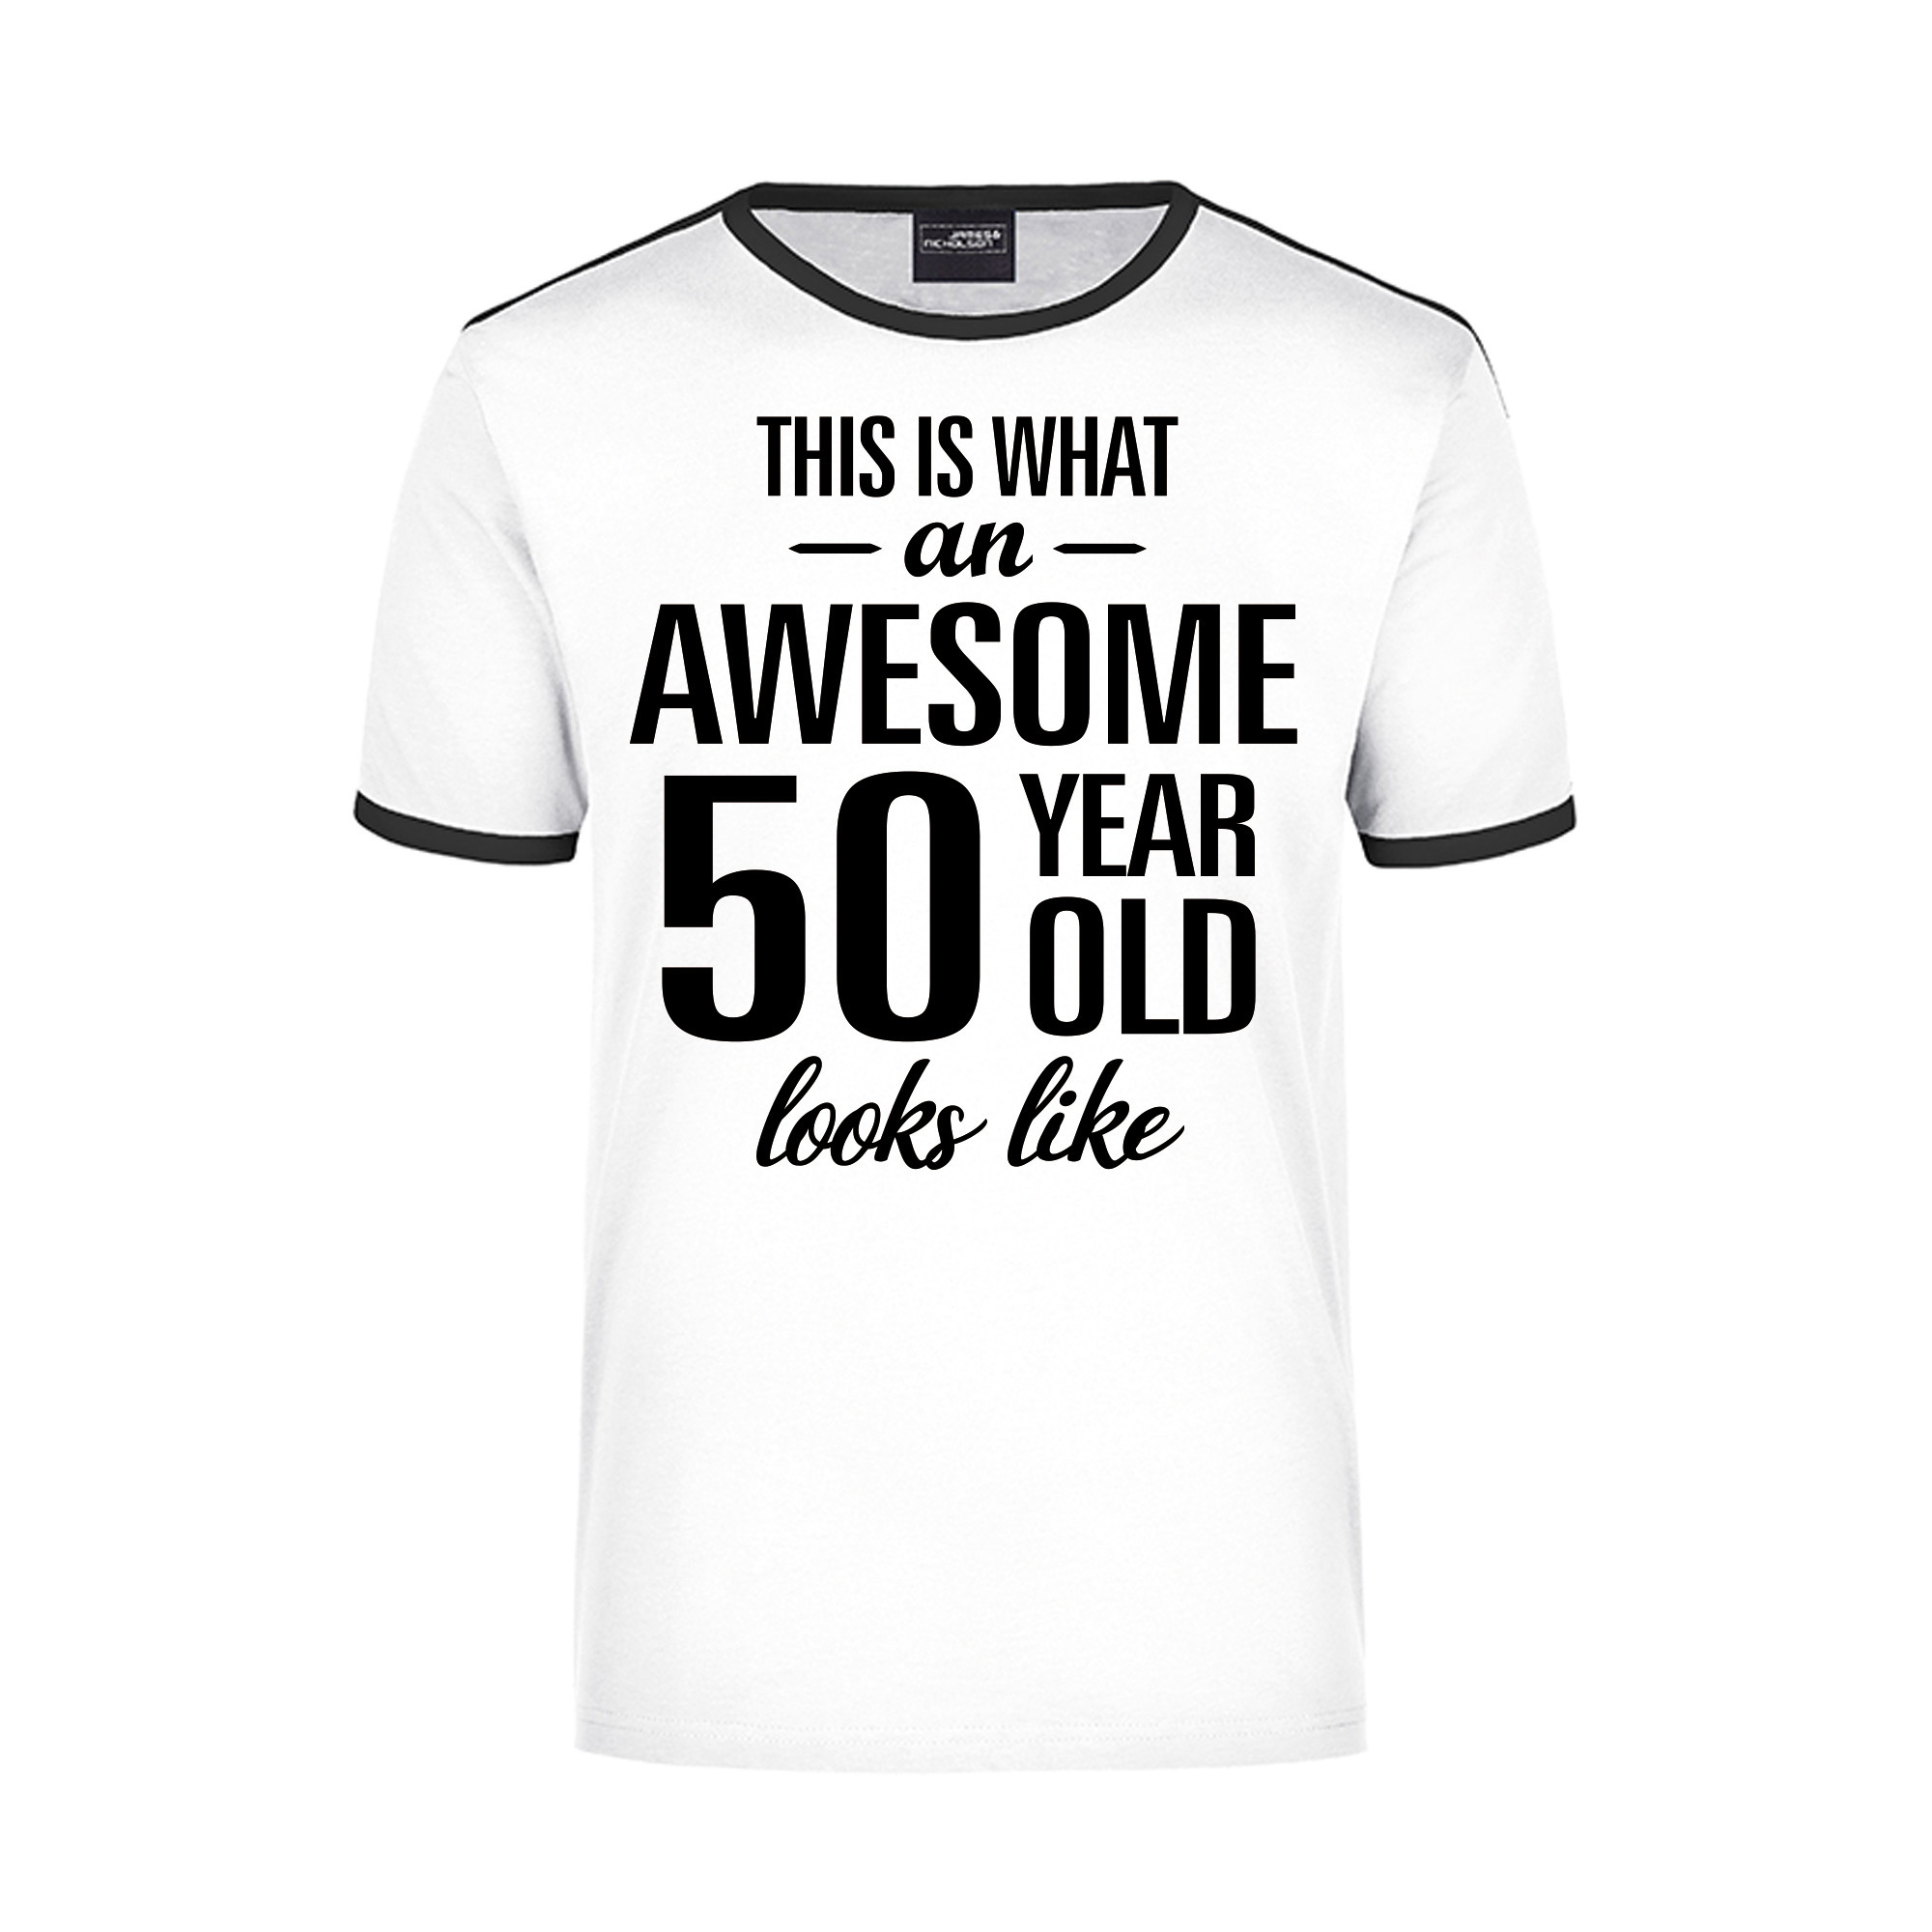 Awesome 50 year-50 jaar wit-zwart ringer cadeau t-shirt voor heren Abraham